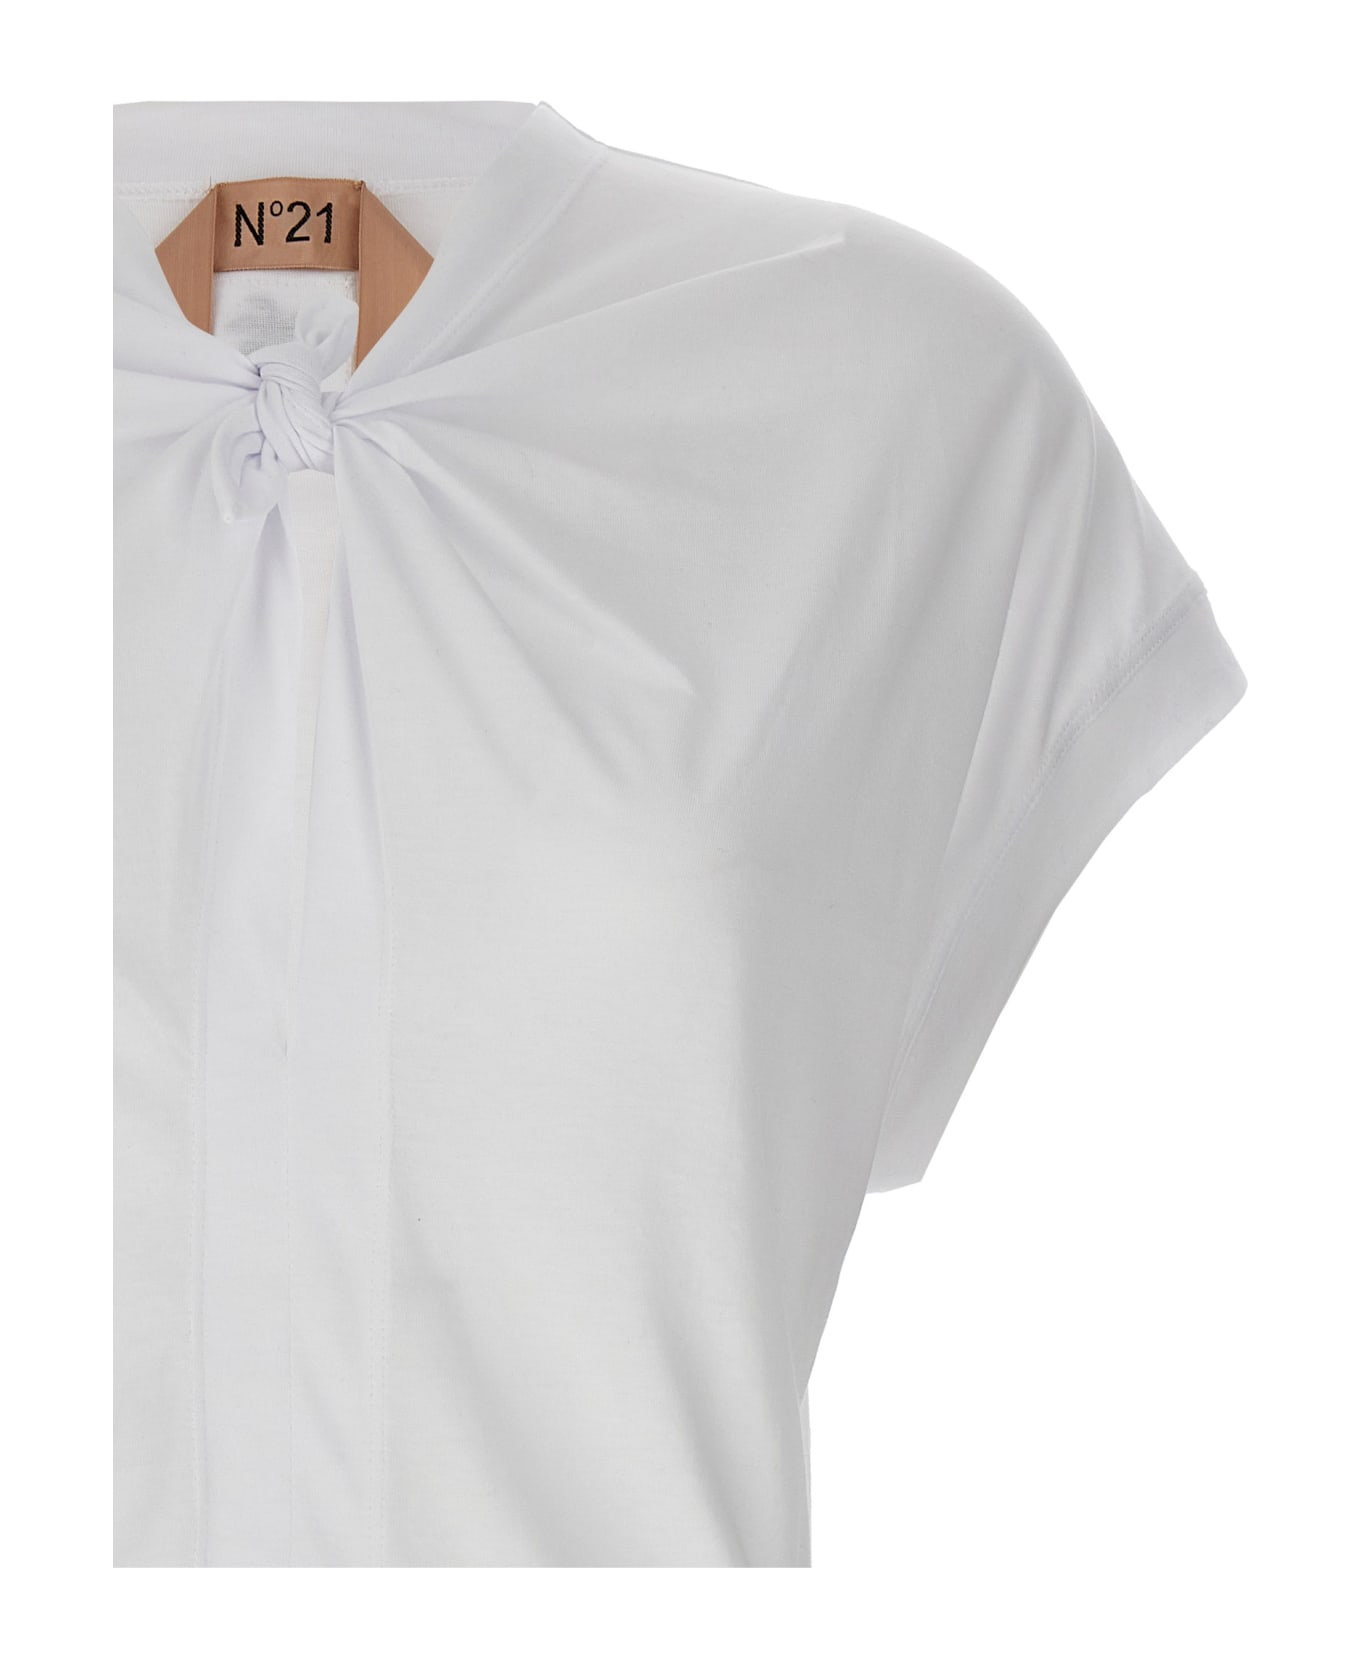 N.21 Knot Detail T-shirt - White